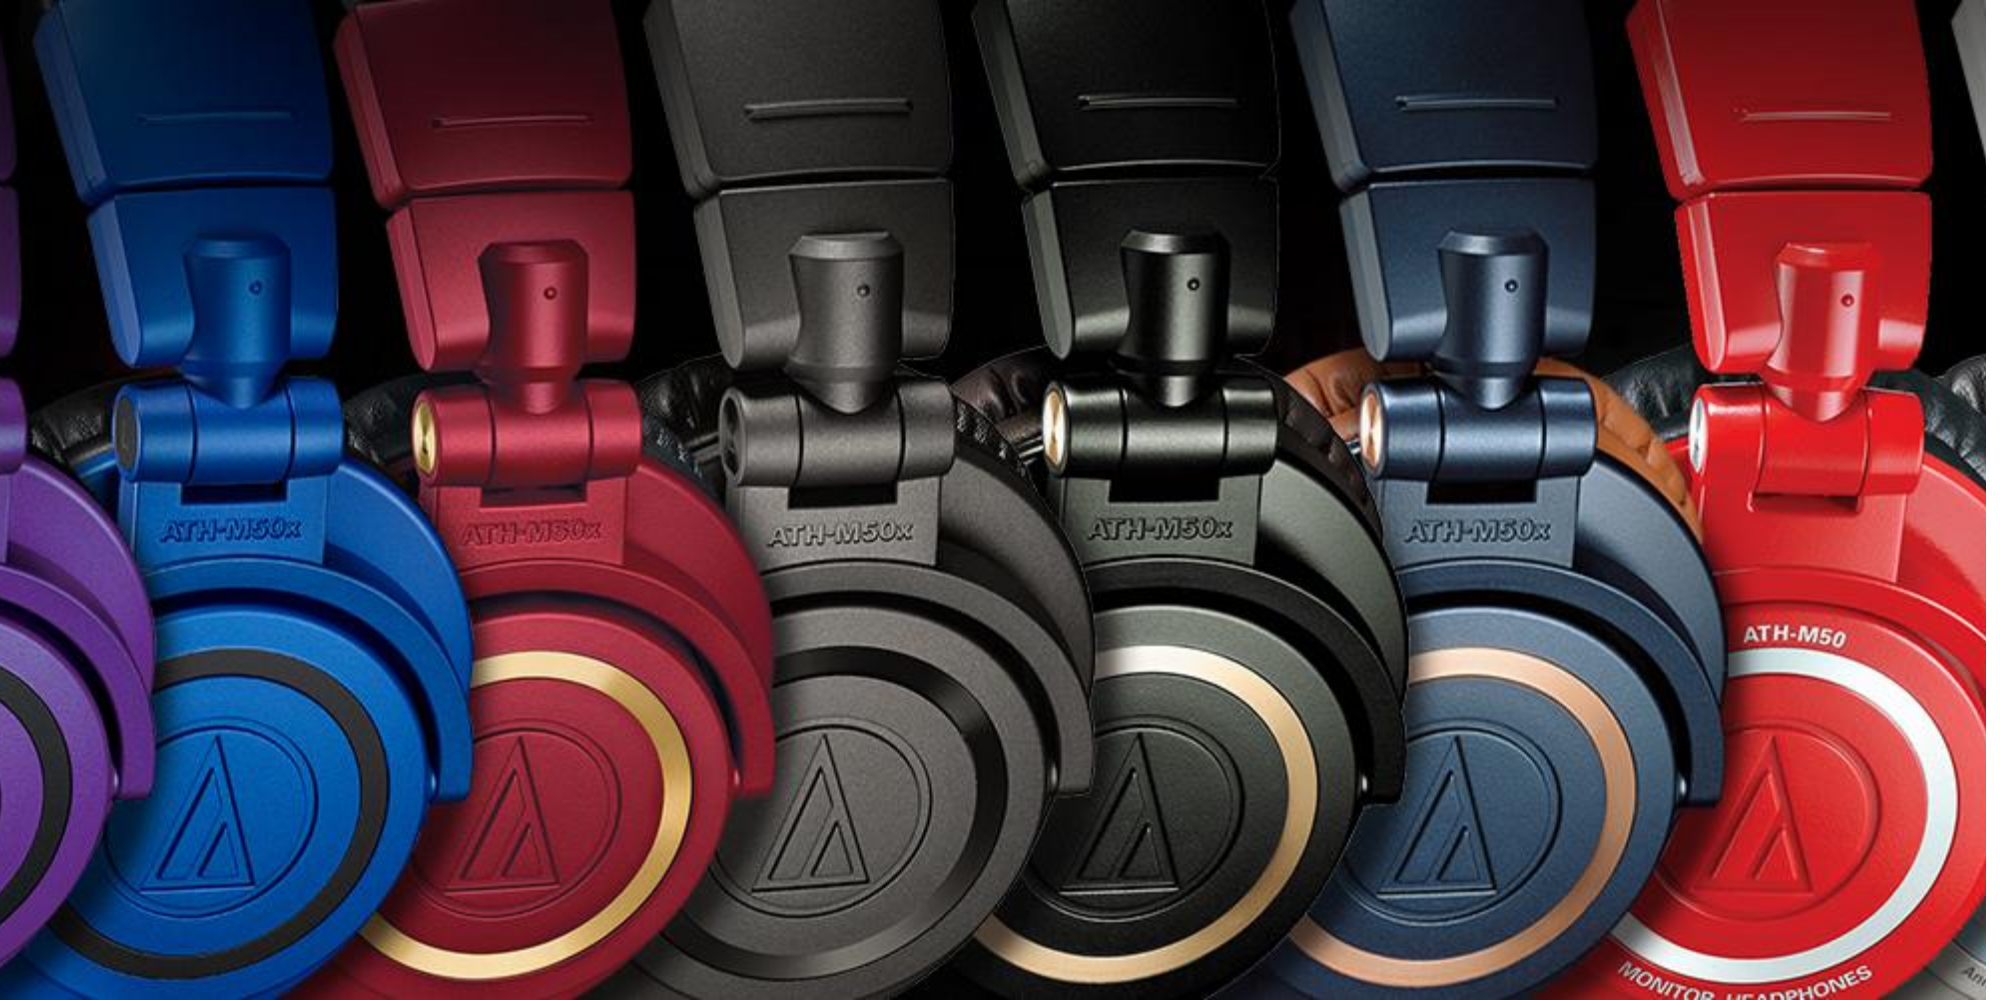 Audio-Technica unveils limited edition 'Lantern Glow' ATH-M50xBT2  headphones